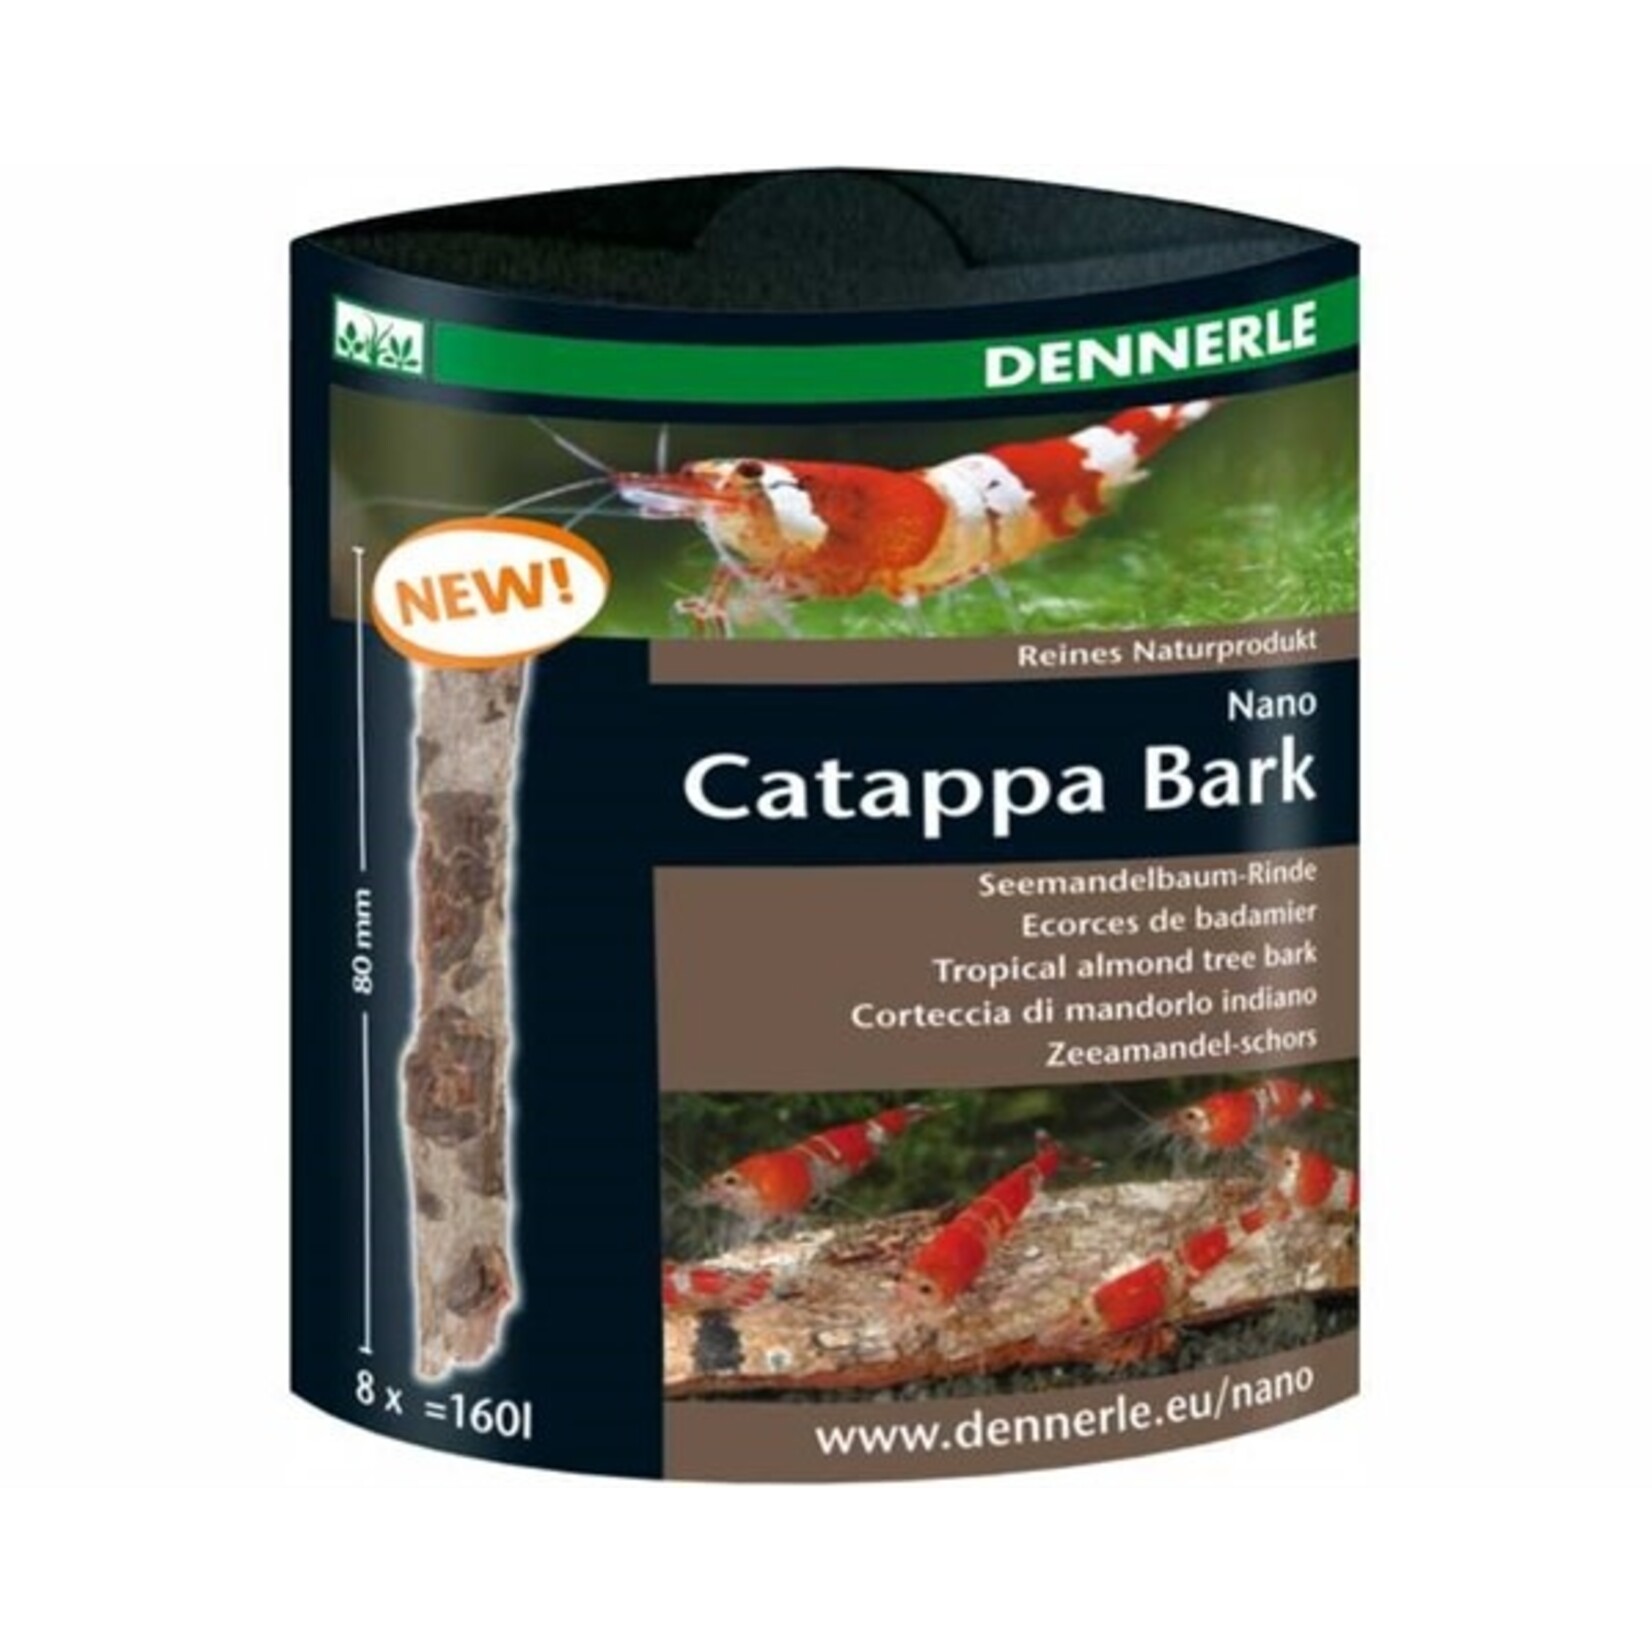 Dennerle Nano catappa barks 8 st